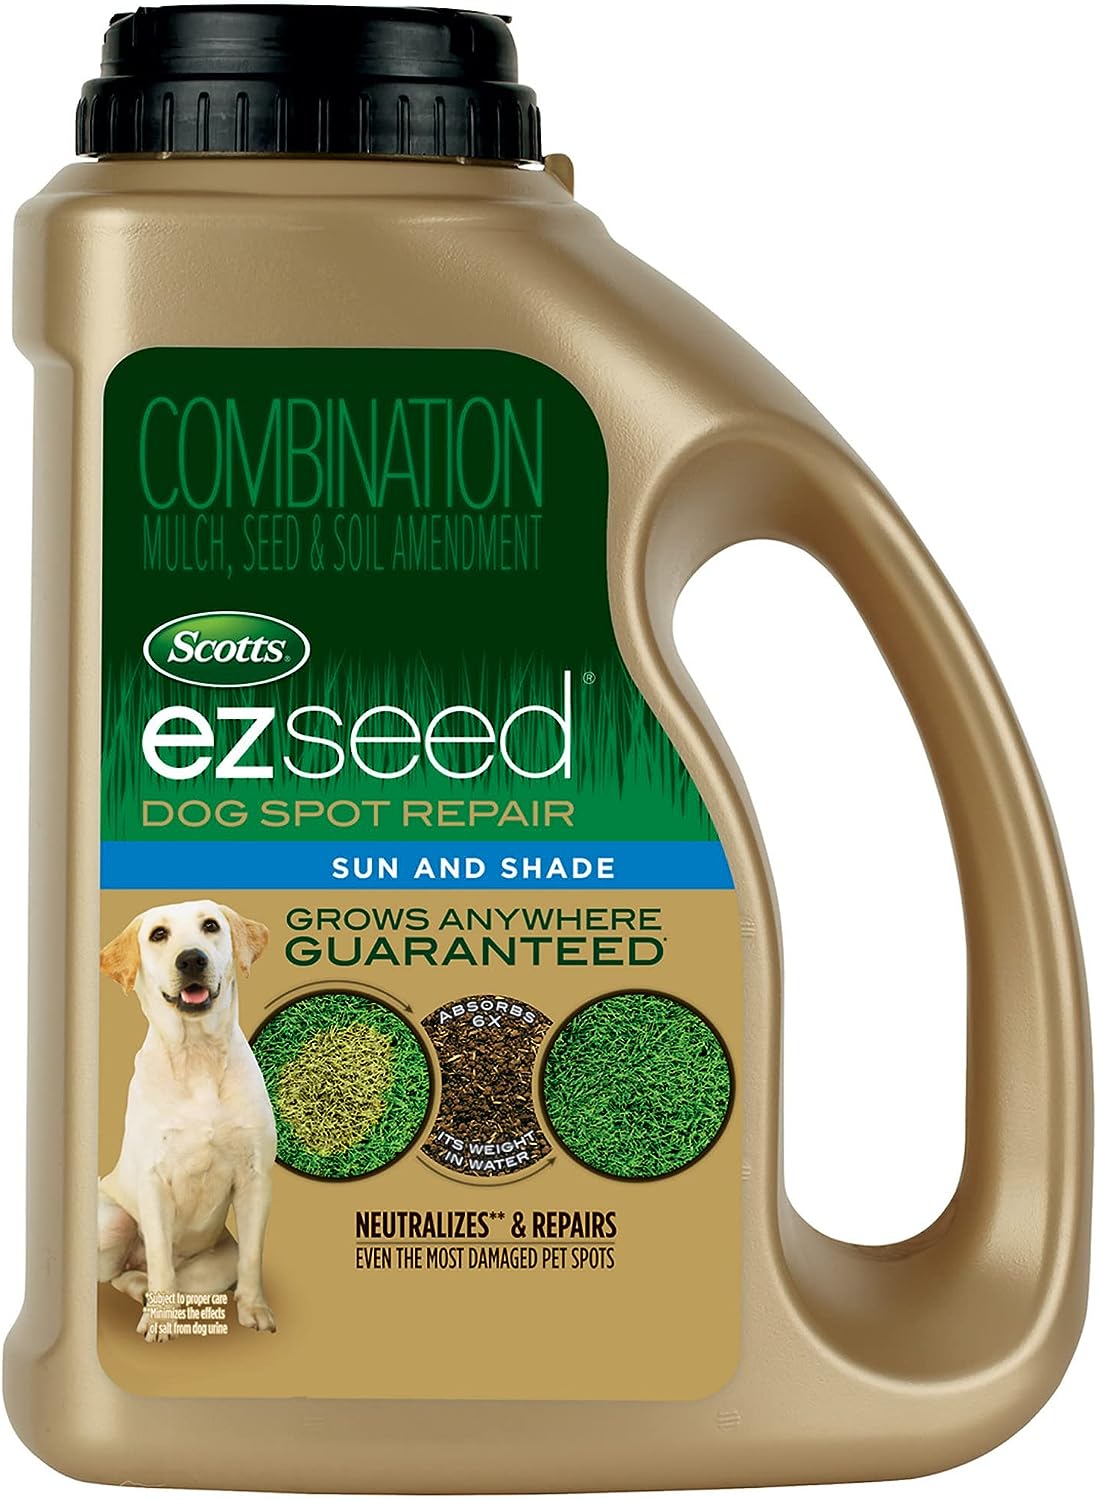 8. Scotts EZ Seed Dog Spot Repair Sun and Shade